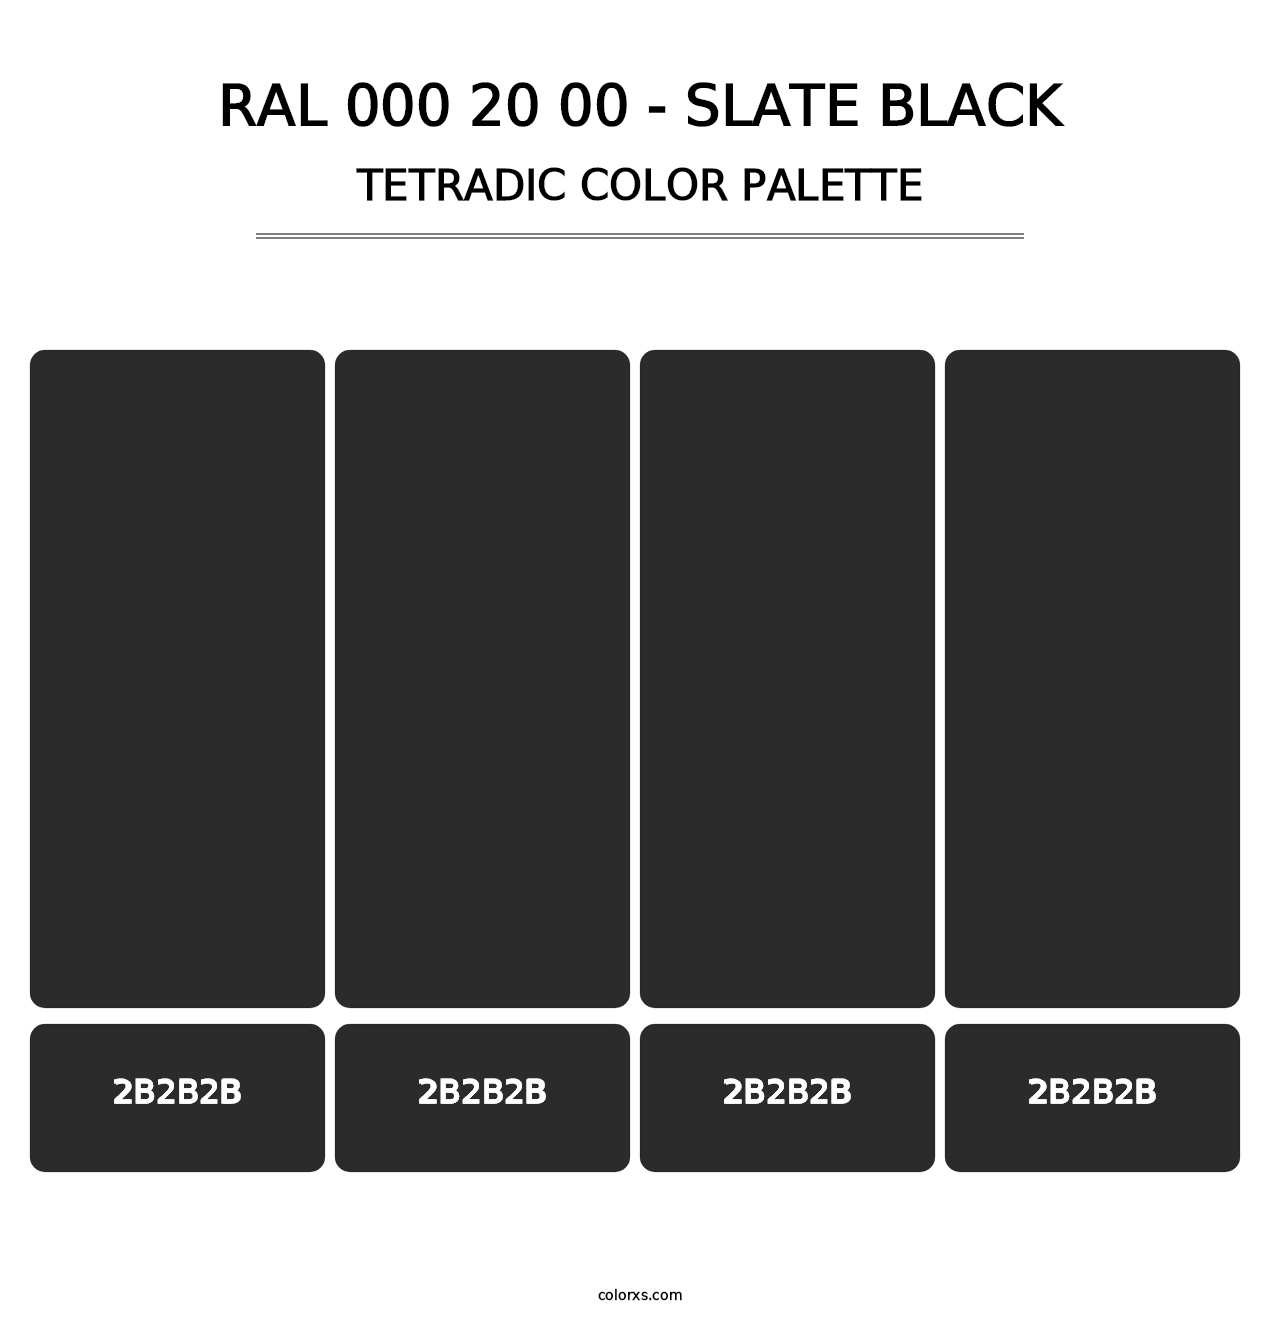 RAL 000 20 00 - Slate Black - Tetradic Color Palette